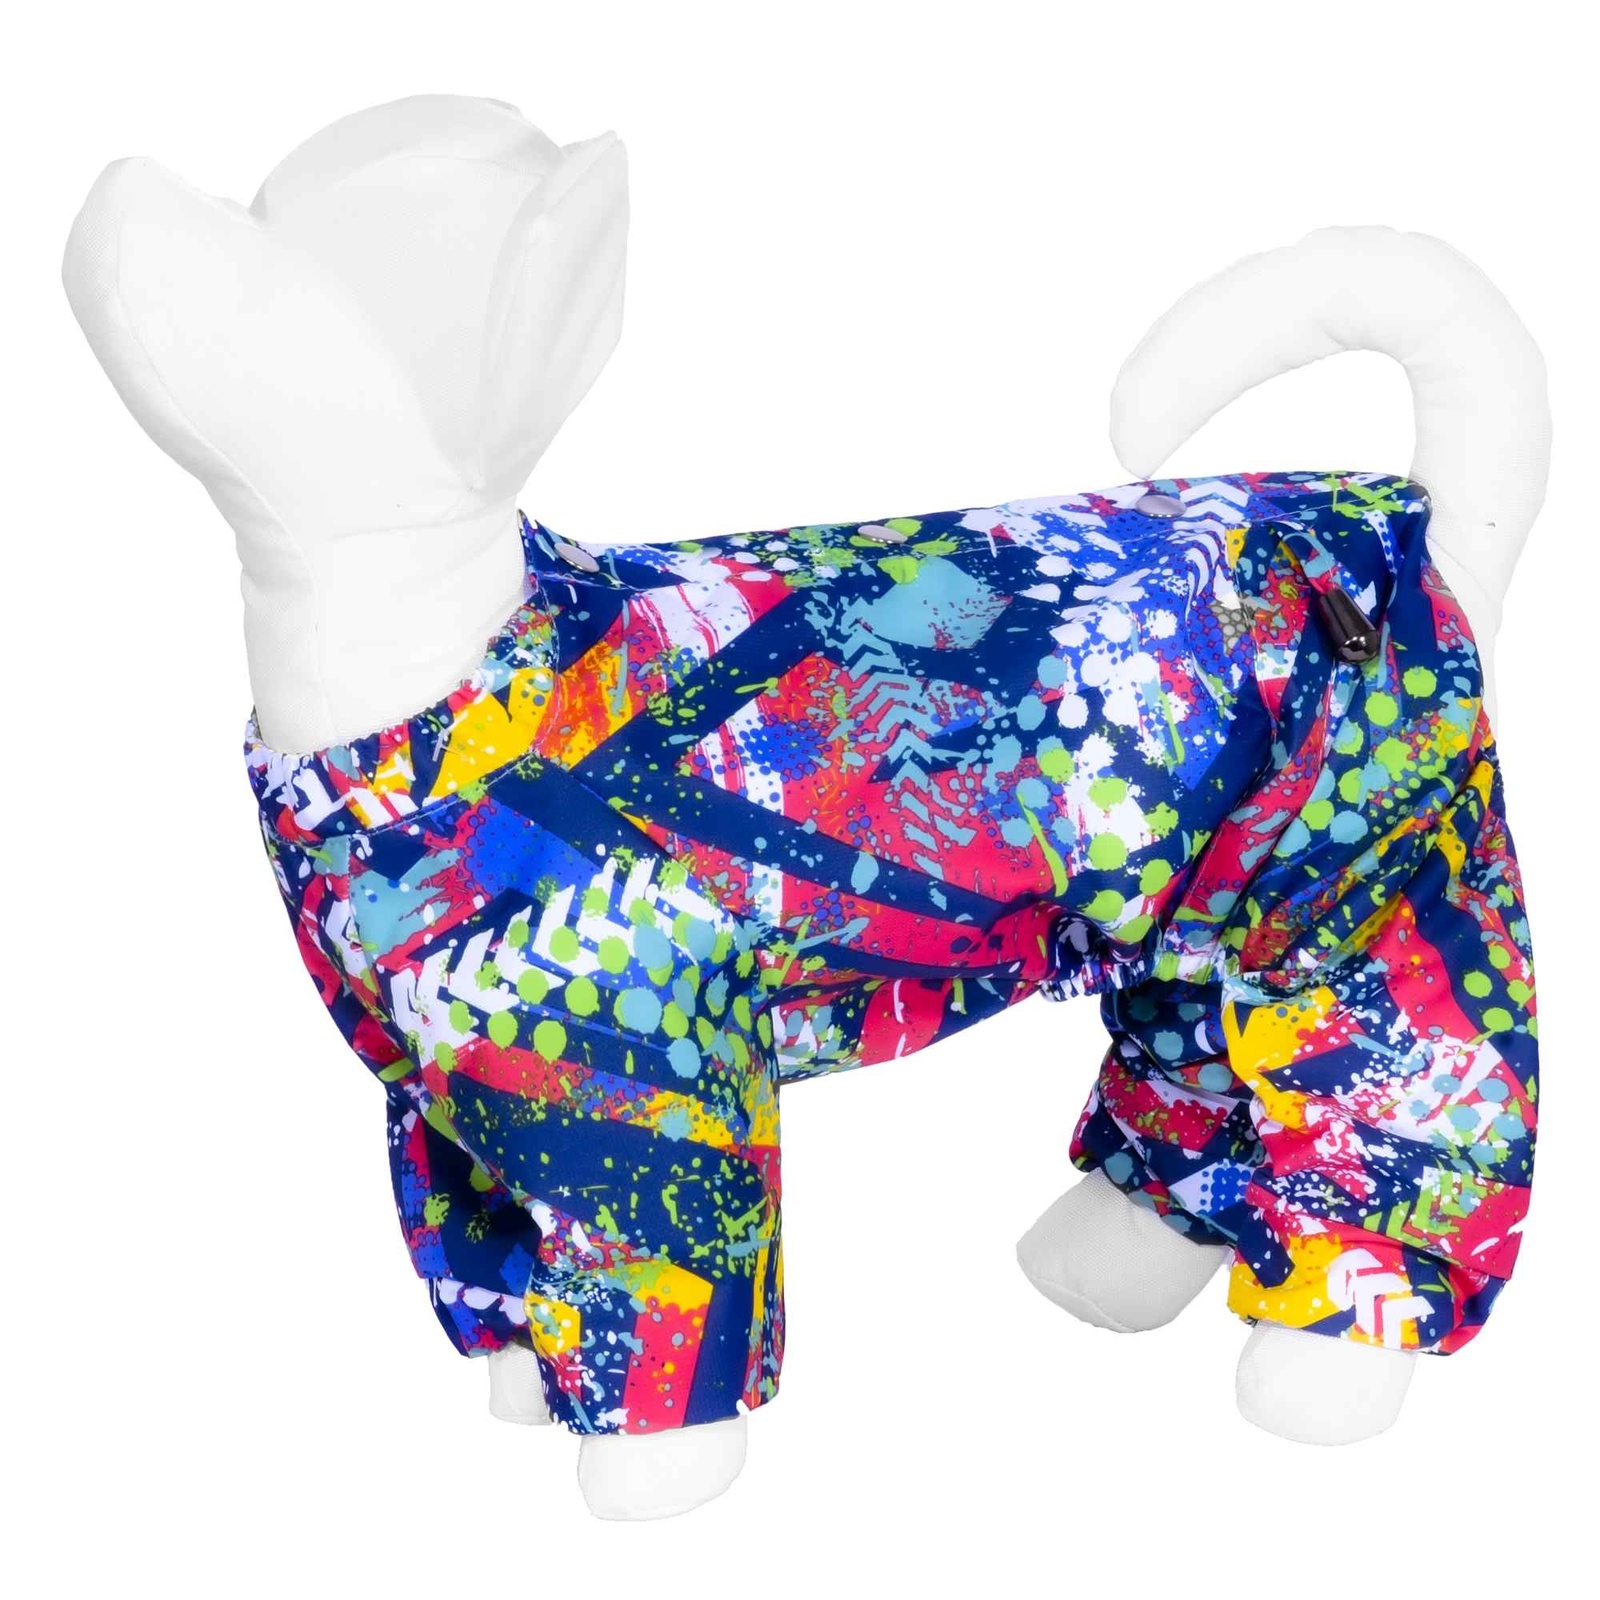 Yami-Yami одежда Yami-Yami одежда дождевик для собаки с рисунком «Абстракция», синий (L) yami yami одежда yami yami одежда дождевик для собаки с рисунком абстракция оранжевый l